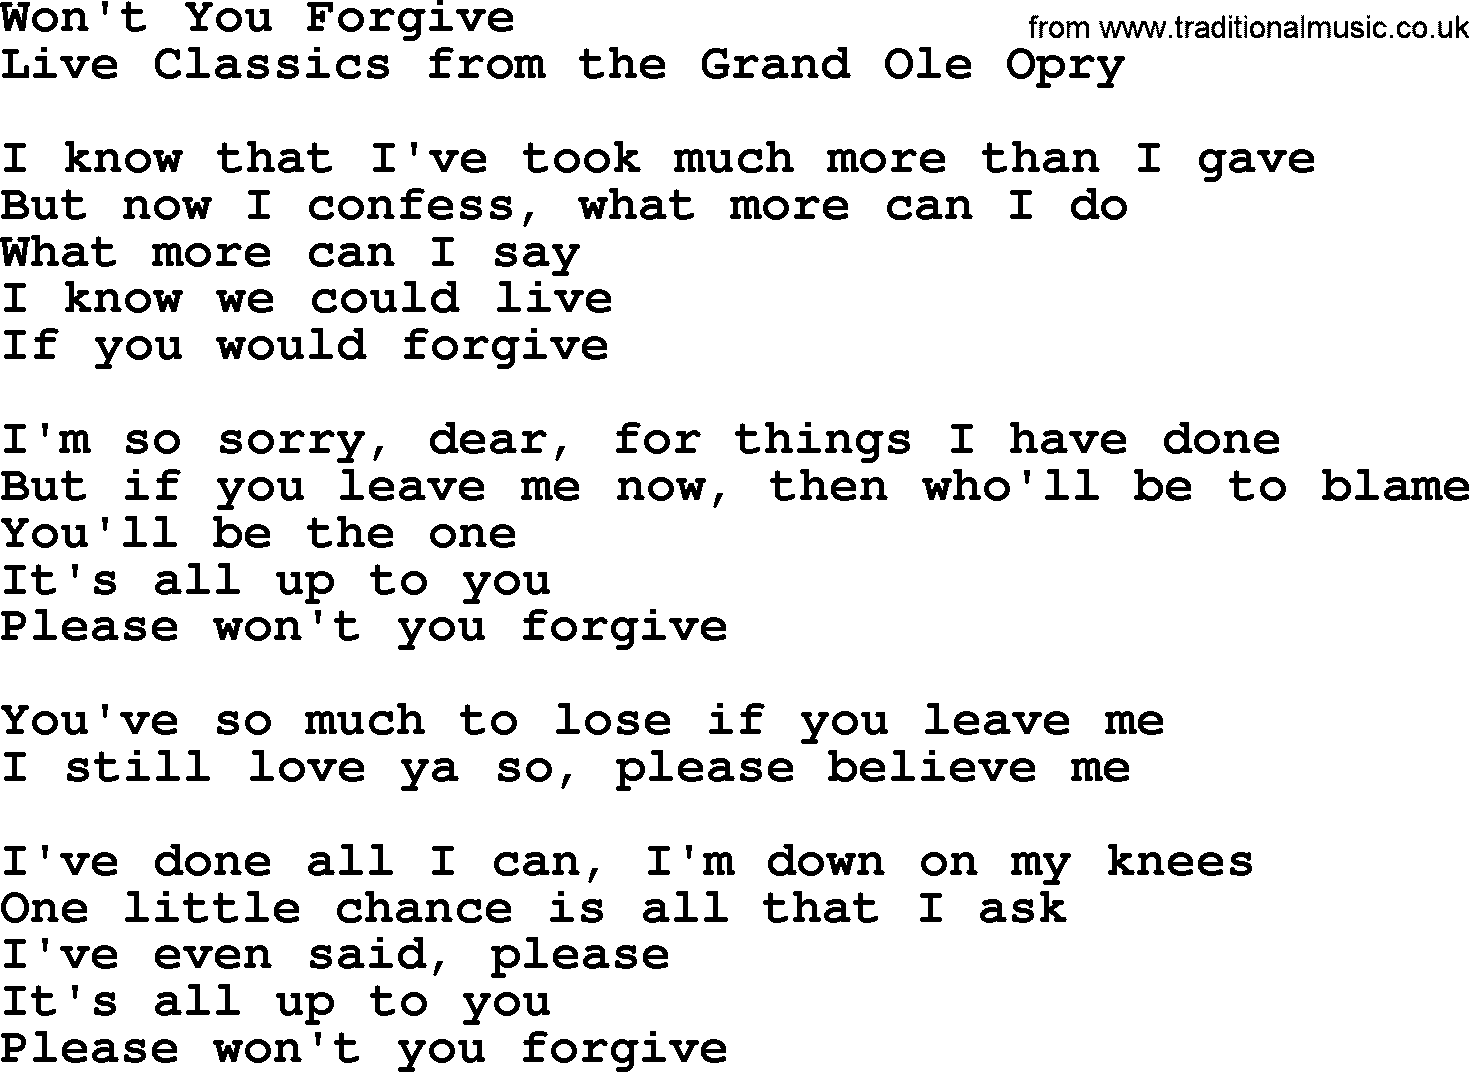 Marty Robbins song: Wont You Forgive, lyrics